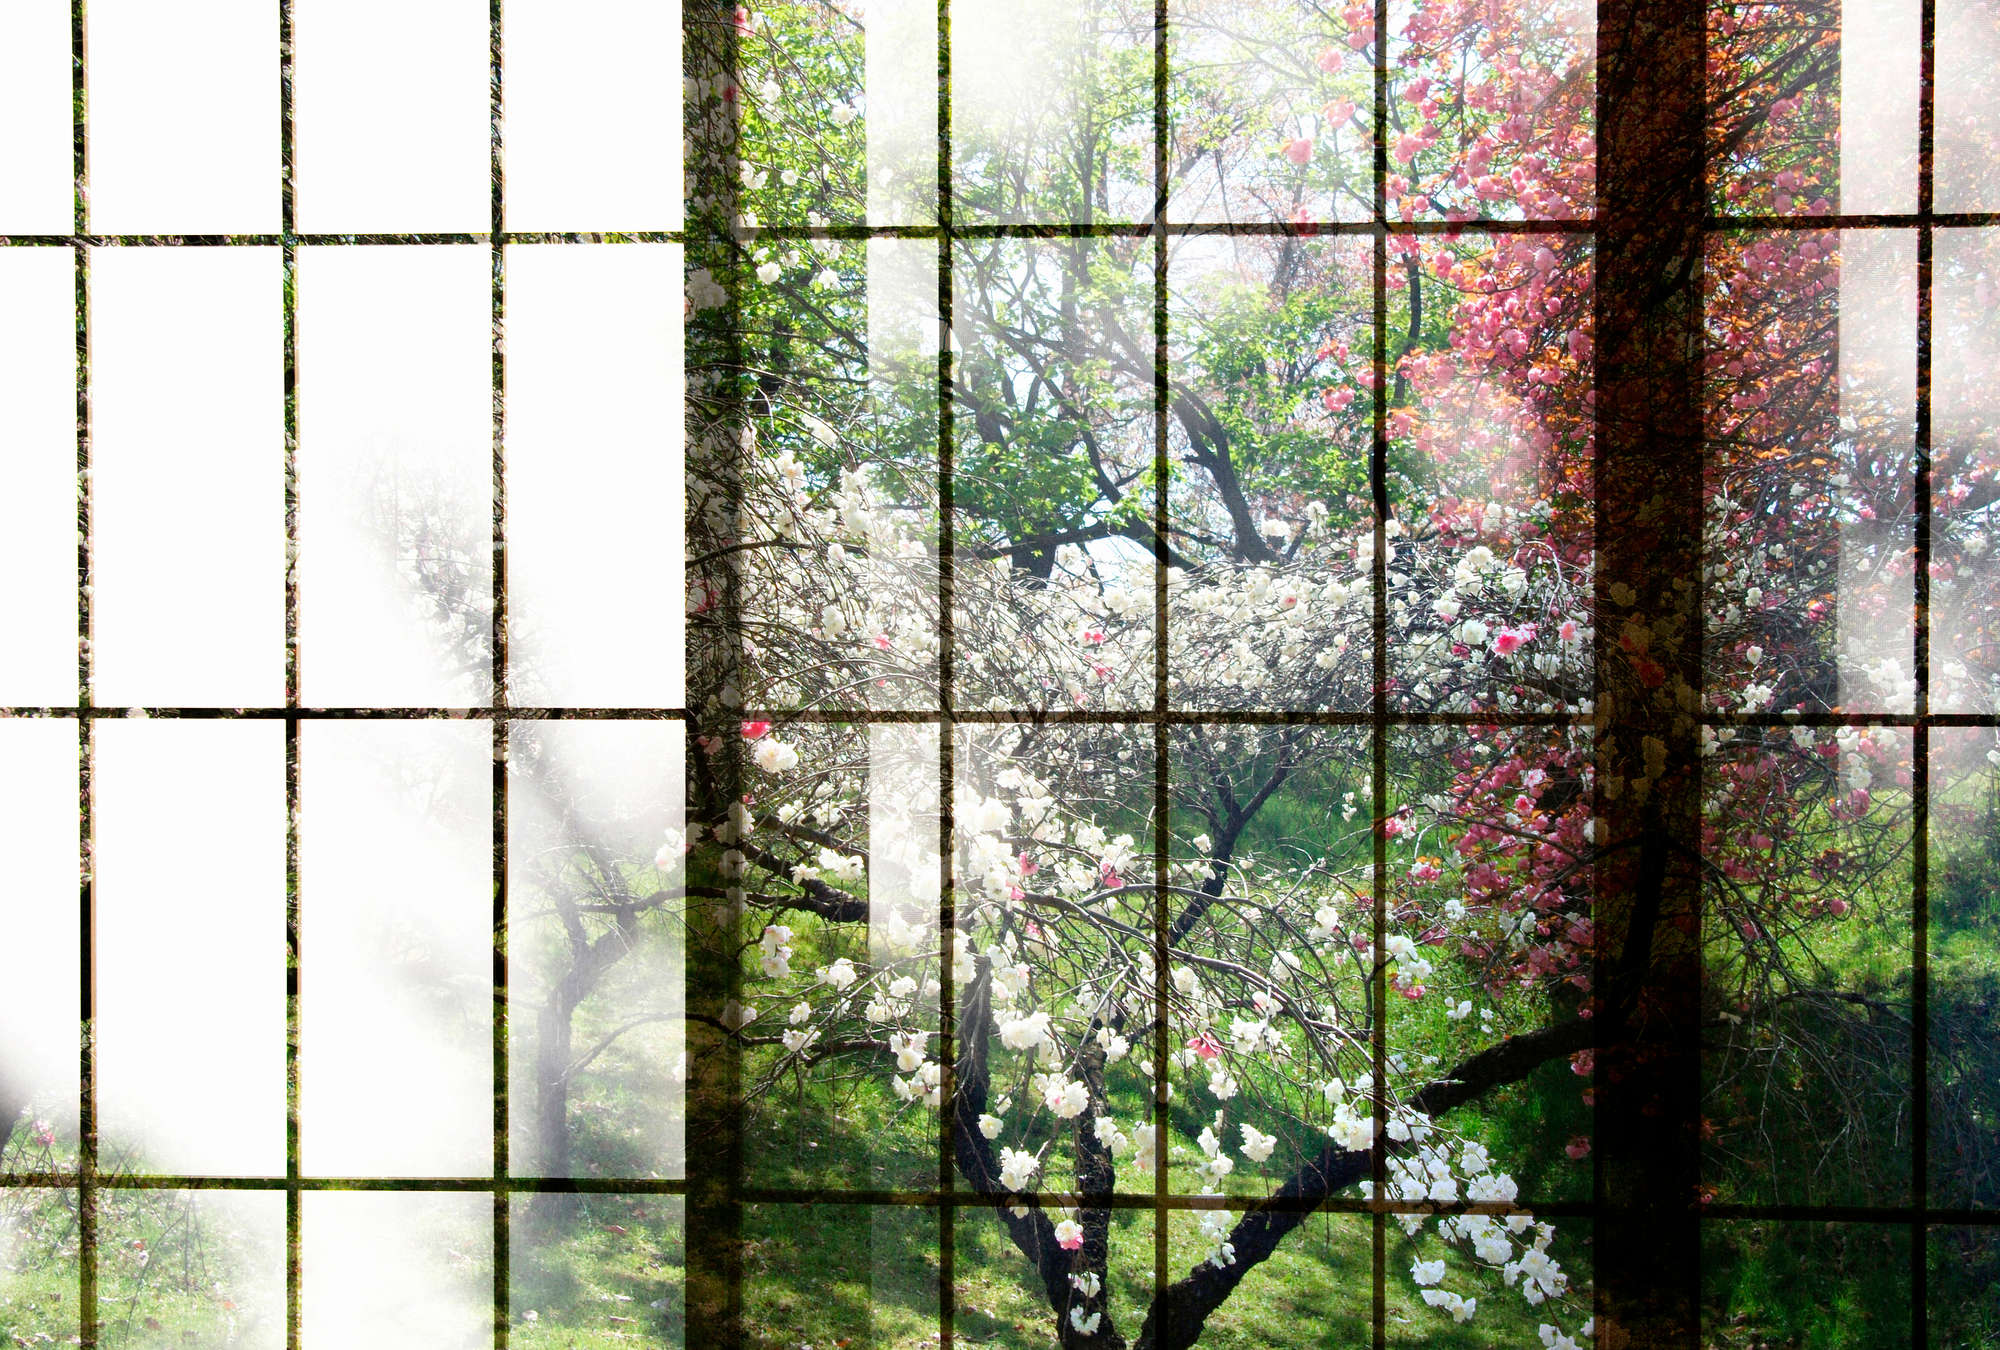             Orchard 2 - Fototapete, Fenster mit Garten Ausblick – Grün, Rosa | Mattes Glattvlies
        